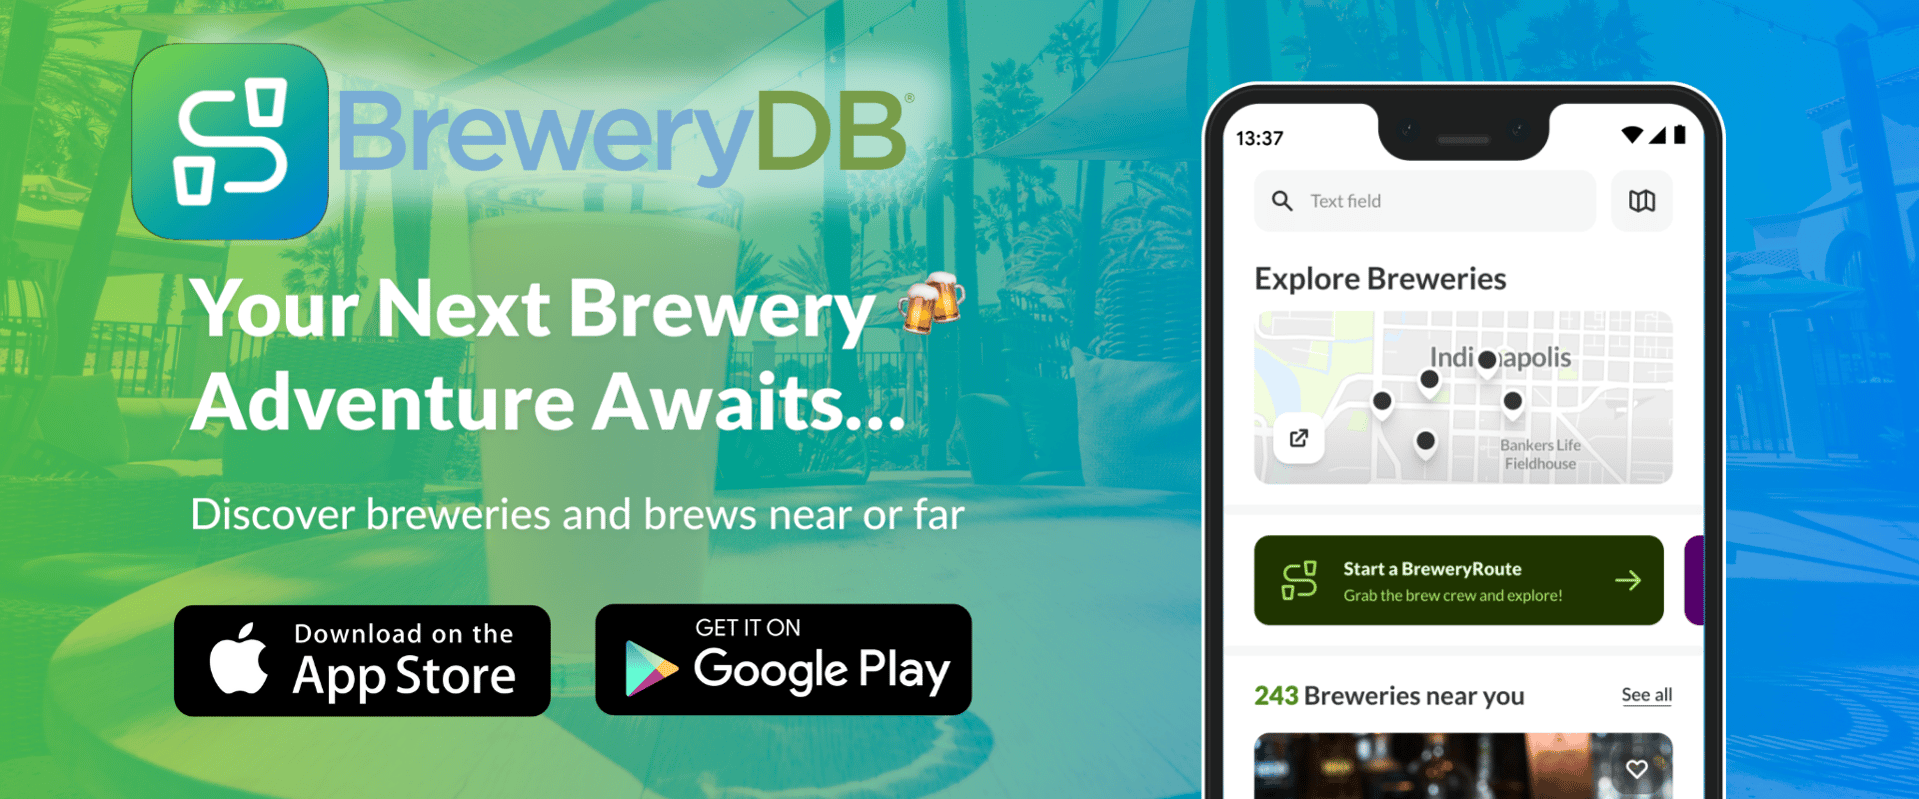 BreweryDB Mobile